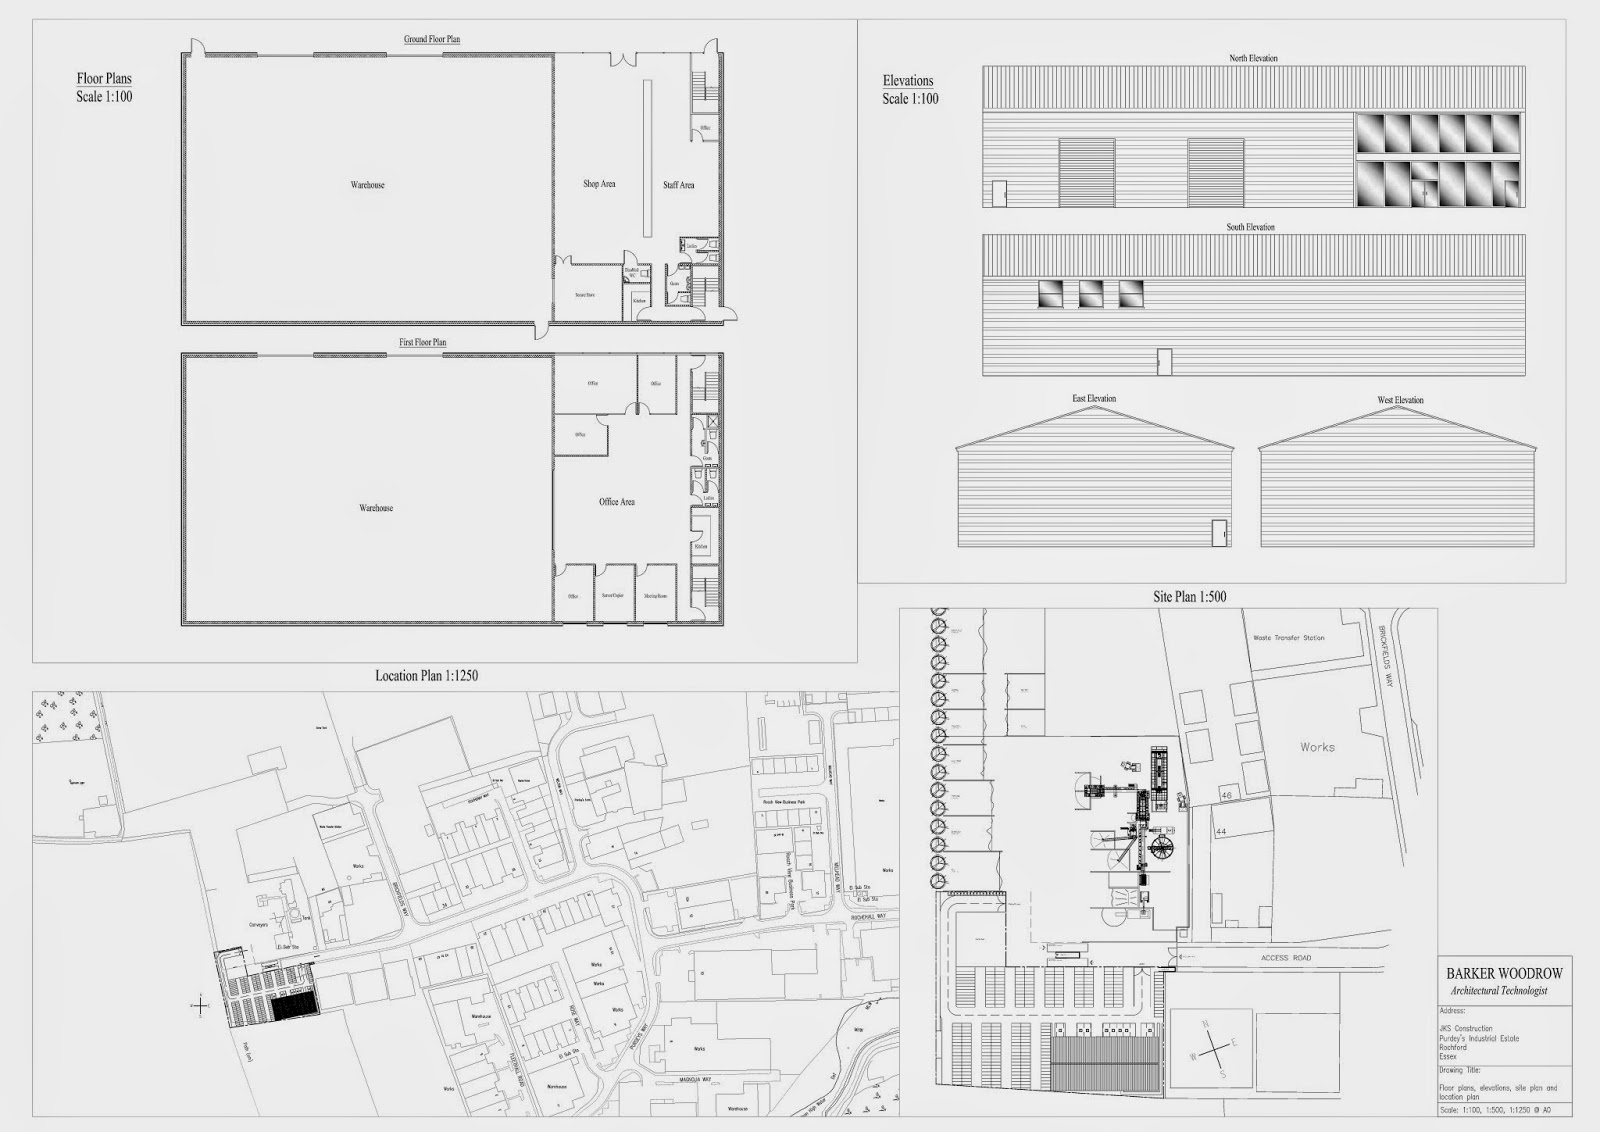 Barker Woodrow Architecture Planning Design Studio Commercial